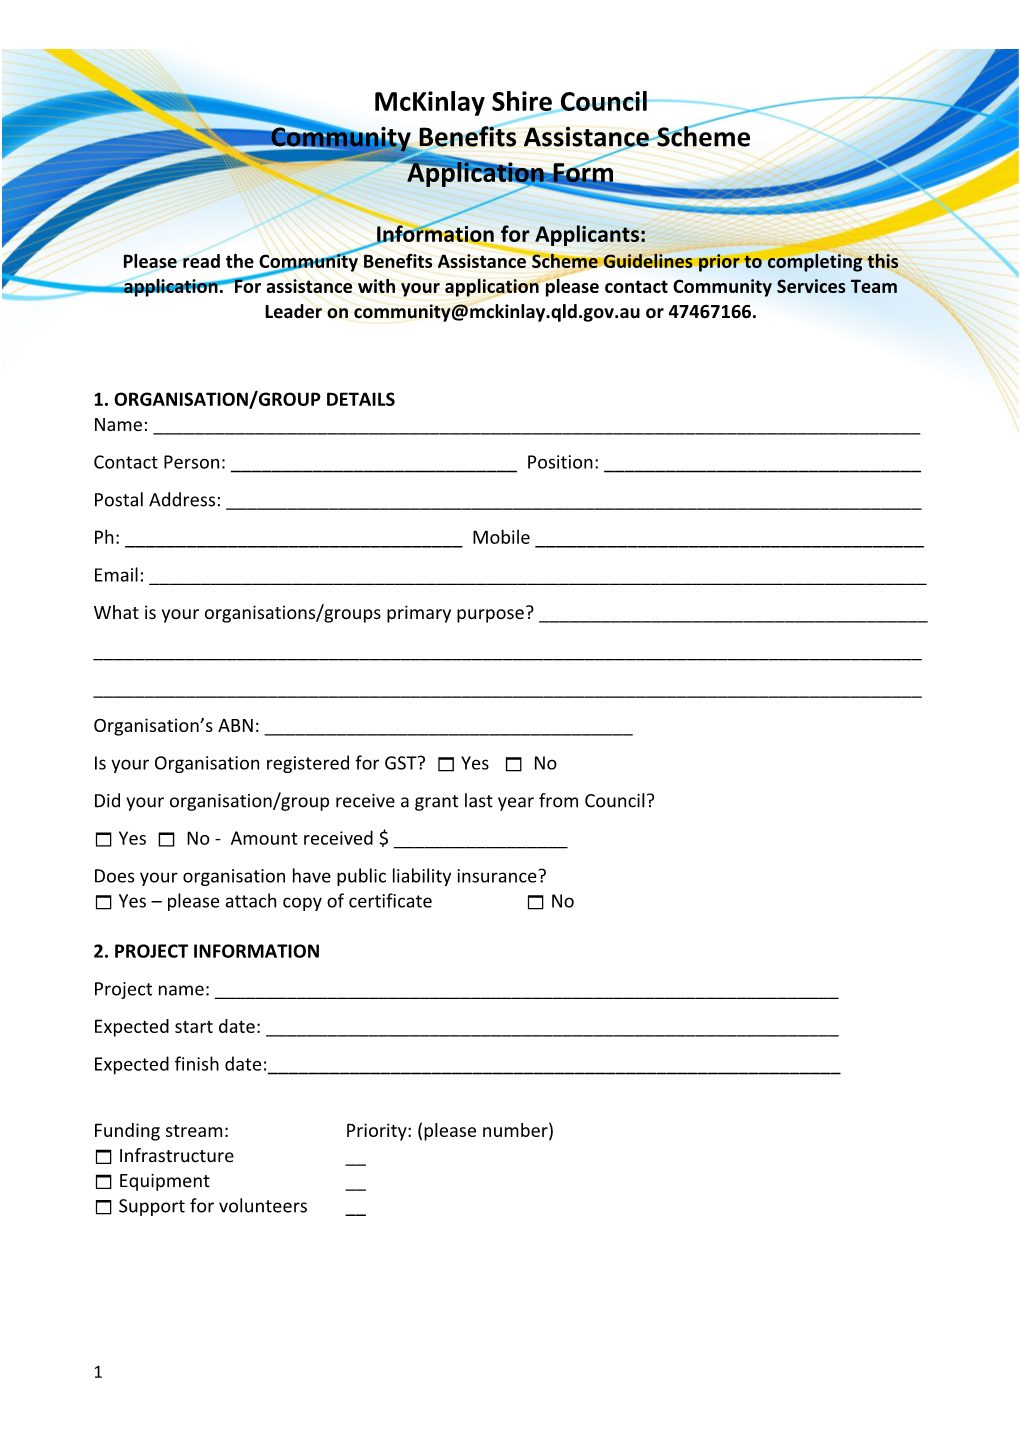 Mckinlay Shire Council Community Benefits Assistance Scheme Application Form